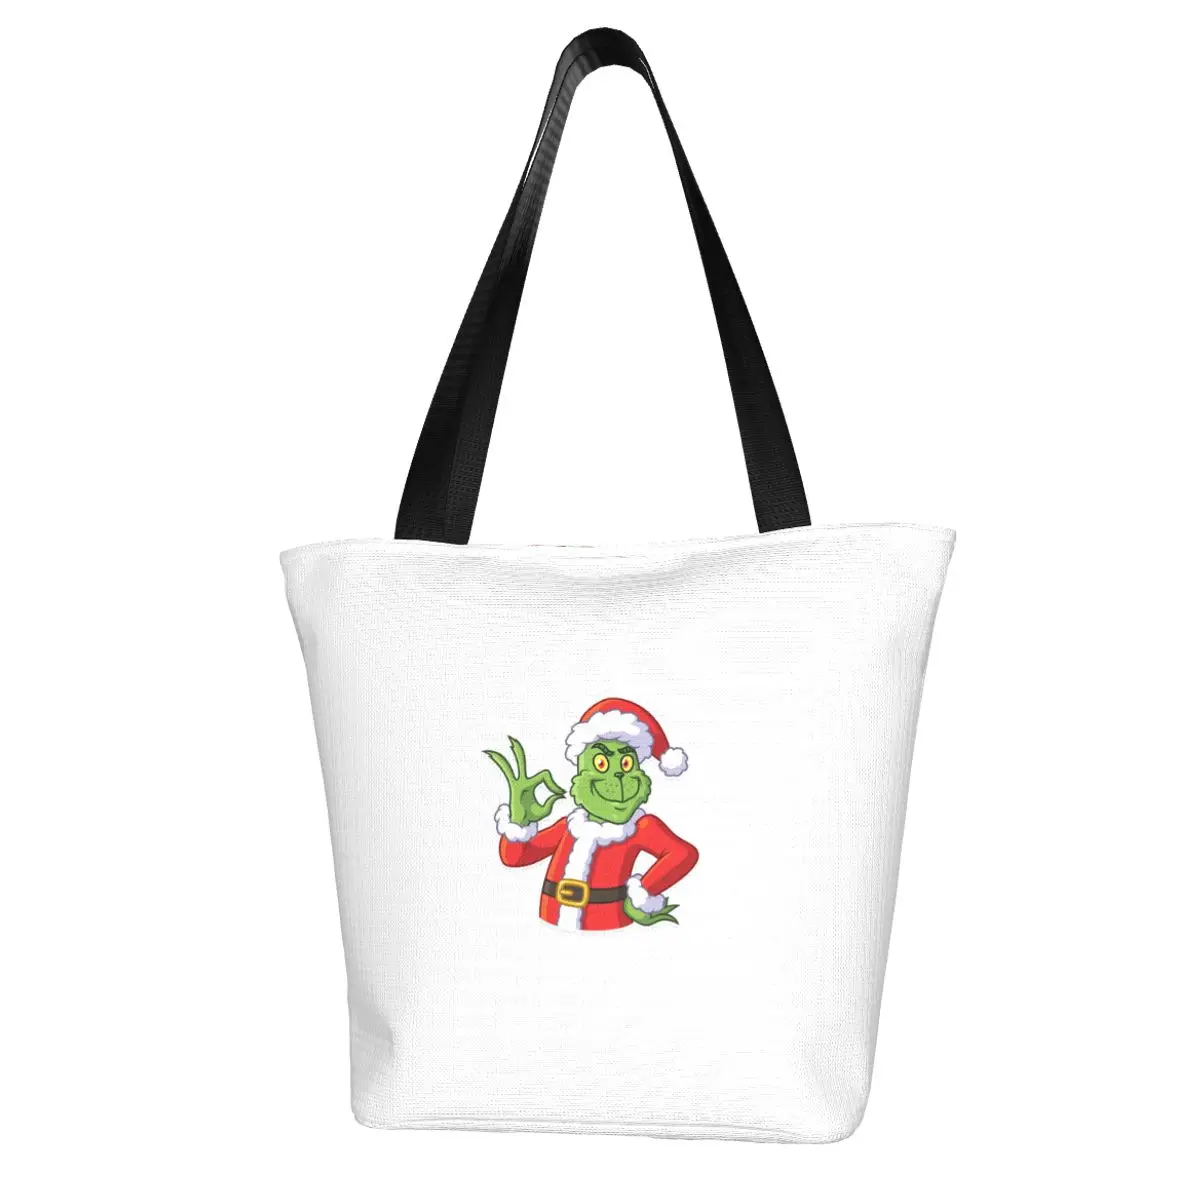 The Grinch Polyester outdoor girl handbag, woman shopping bag, shoulder bag, canvas bag, gift bag